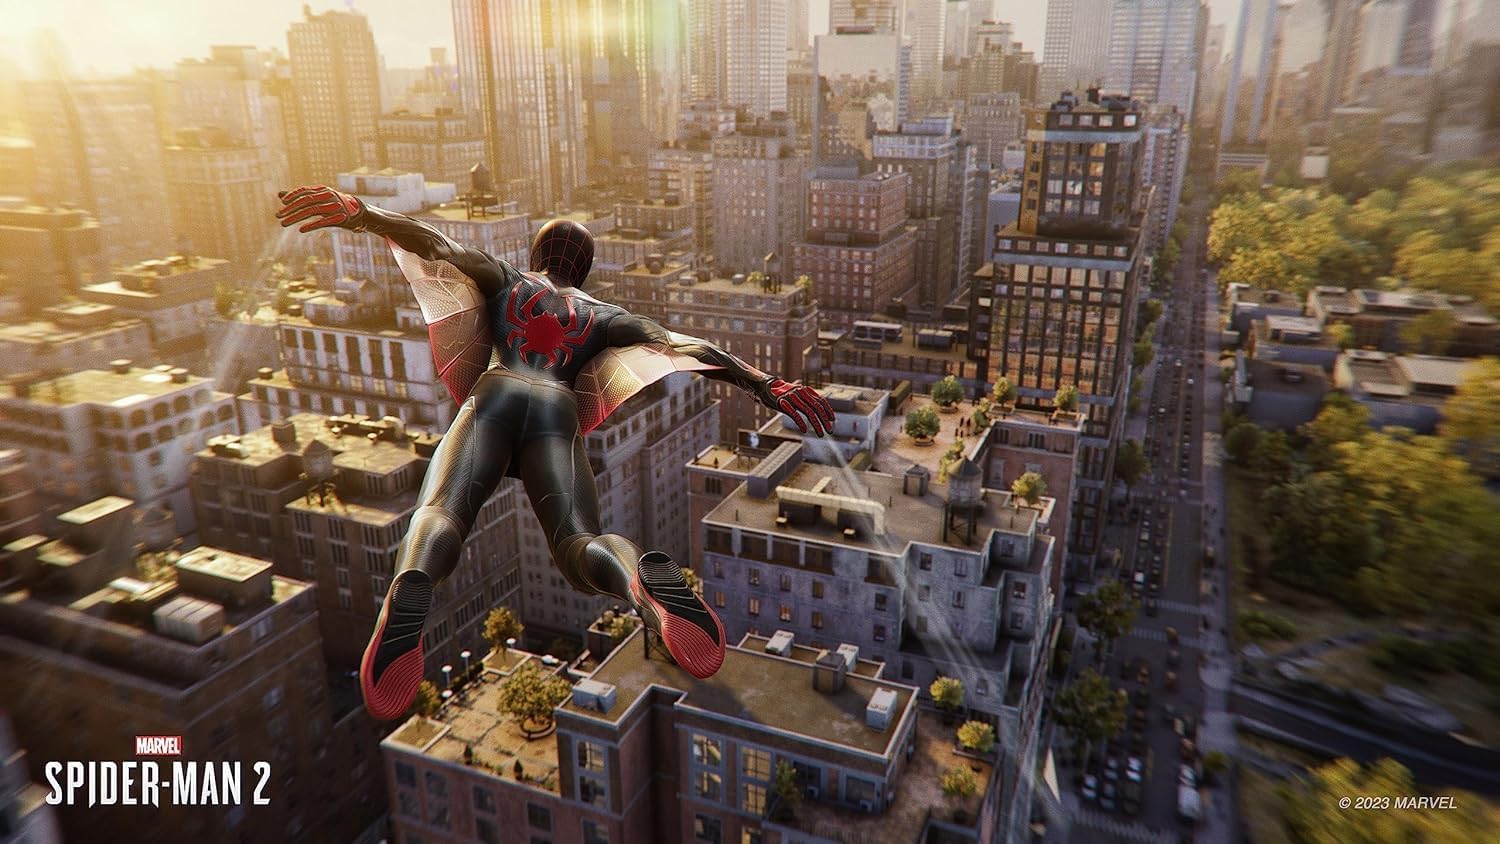 PS5 slim + Spiderman 2 image